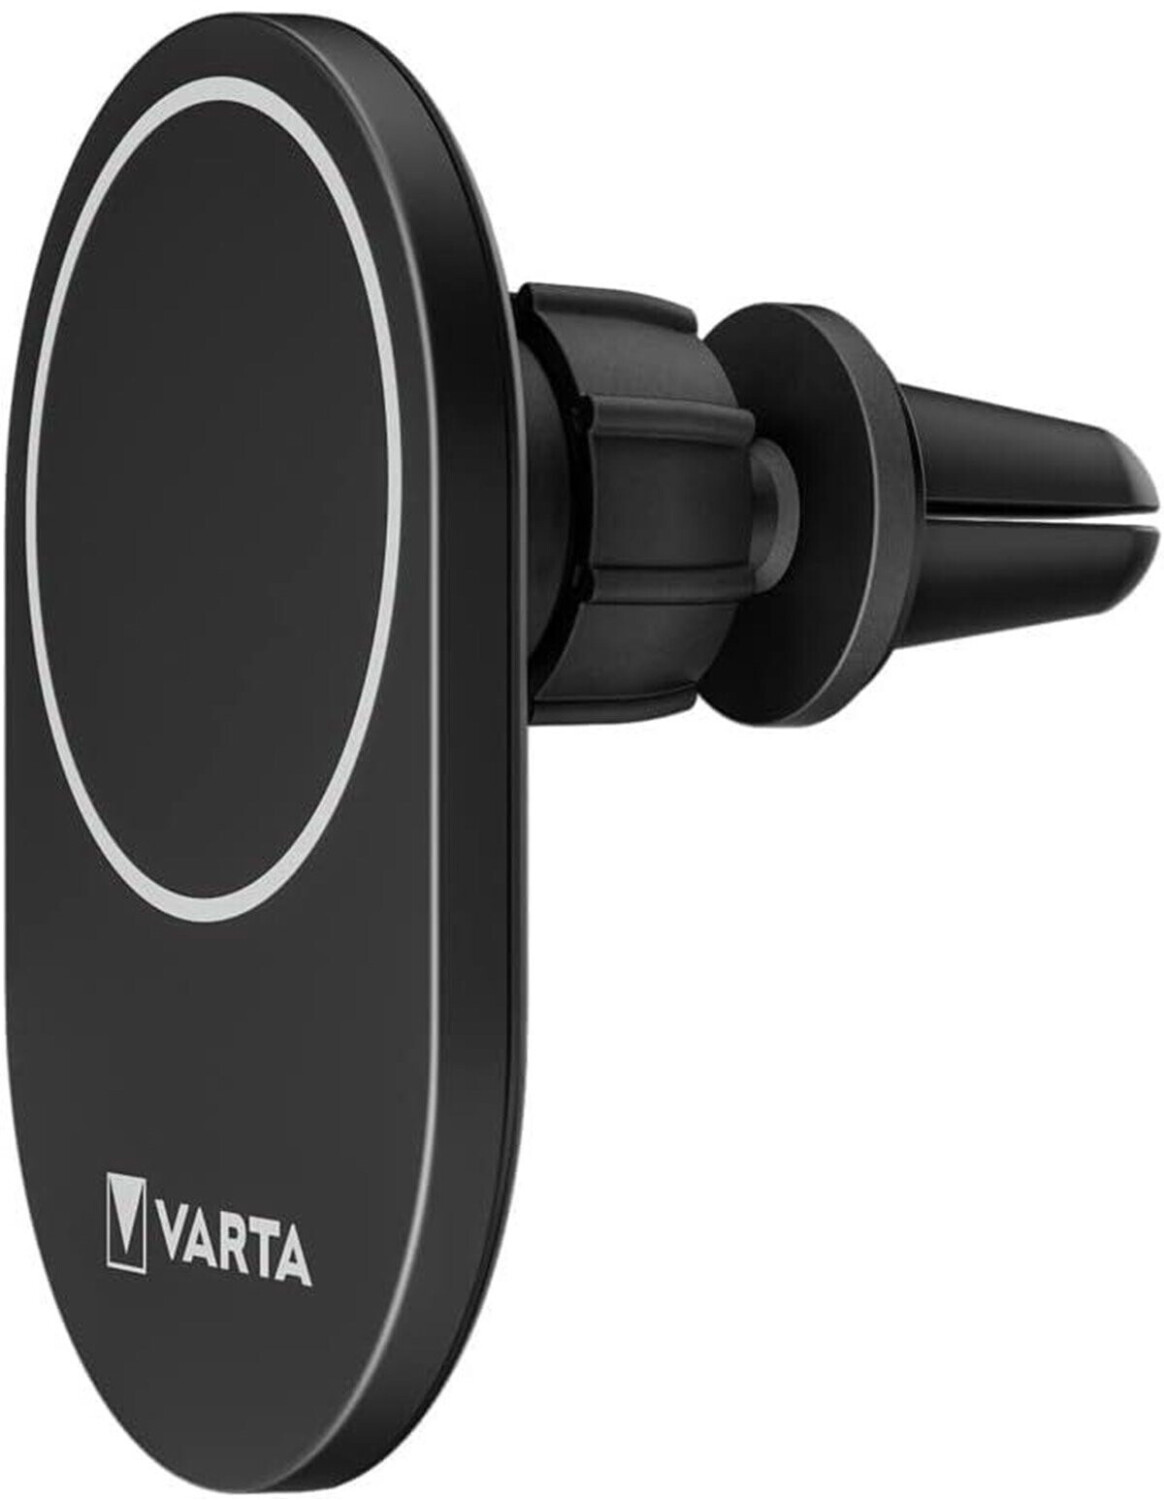 VARTA Mag Pro kabelloses Auto Ladegerät 15W ab € 27,69